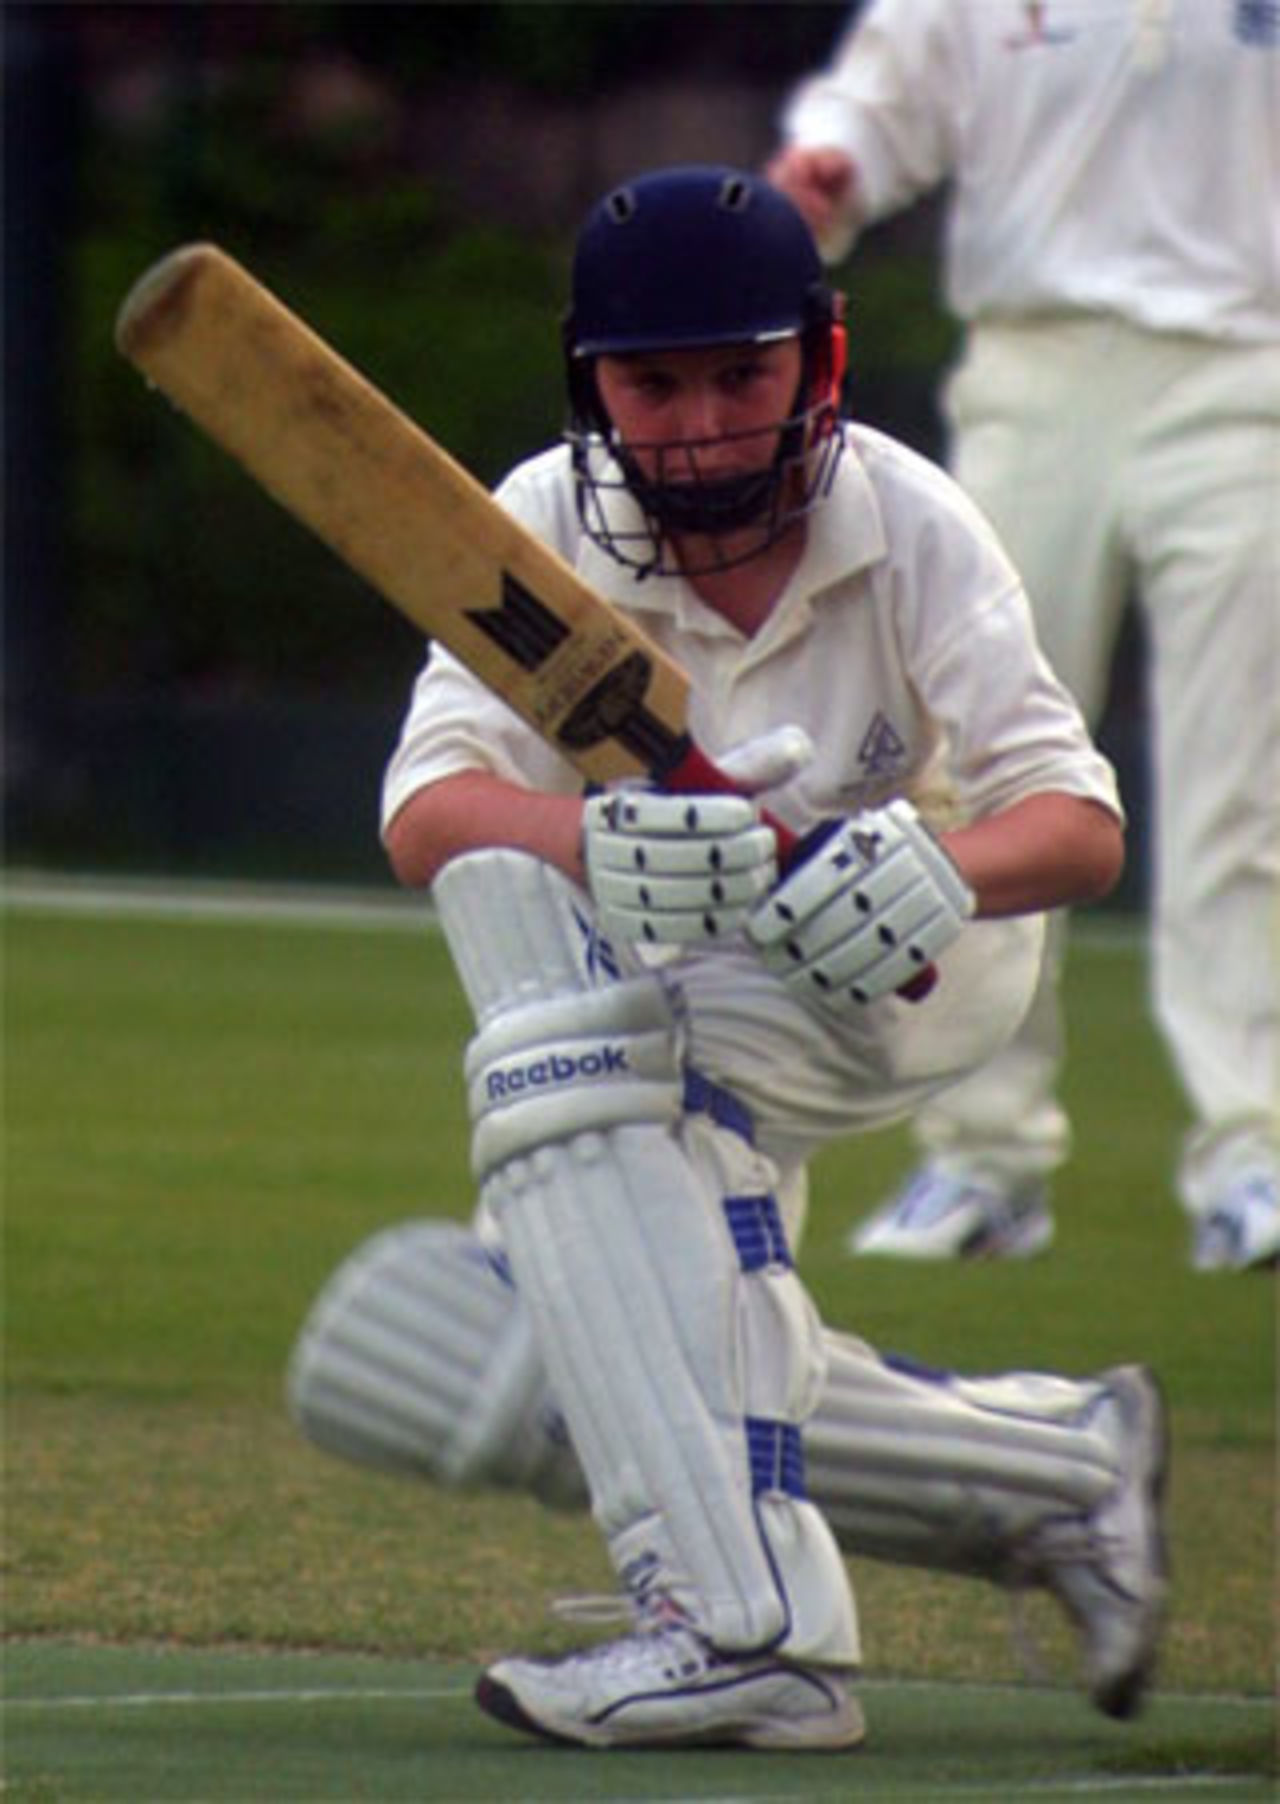 James Atkinson batting for Crusaders against Nomads at Kowloon Cricket Club during the 2003-04 season